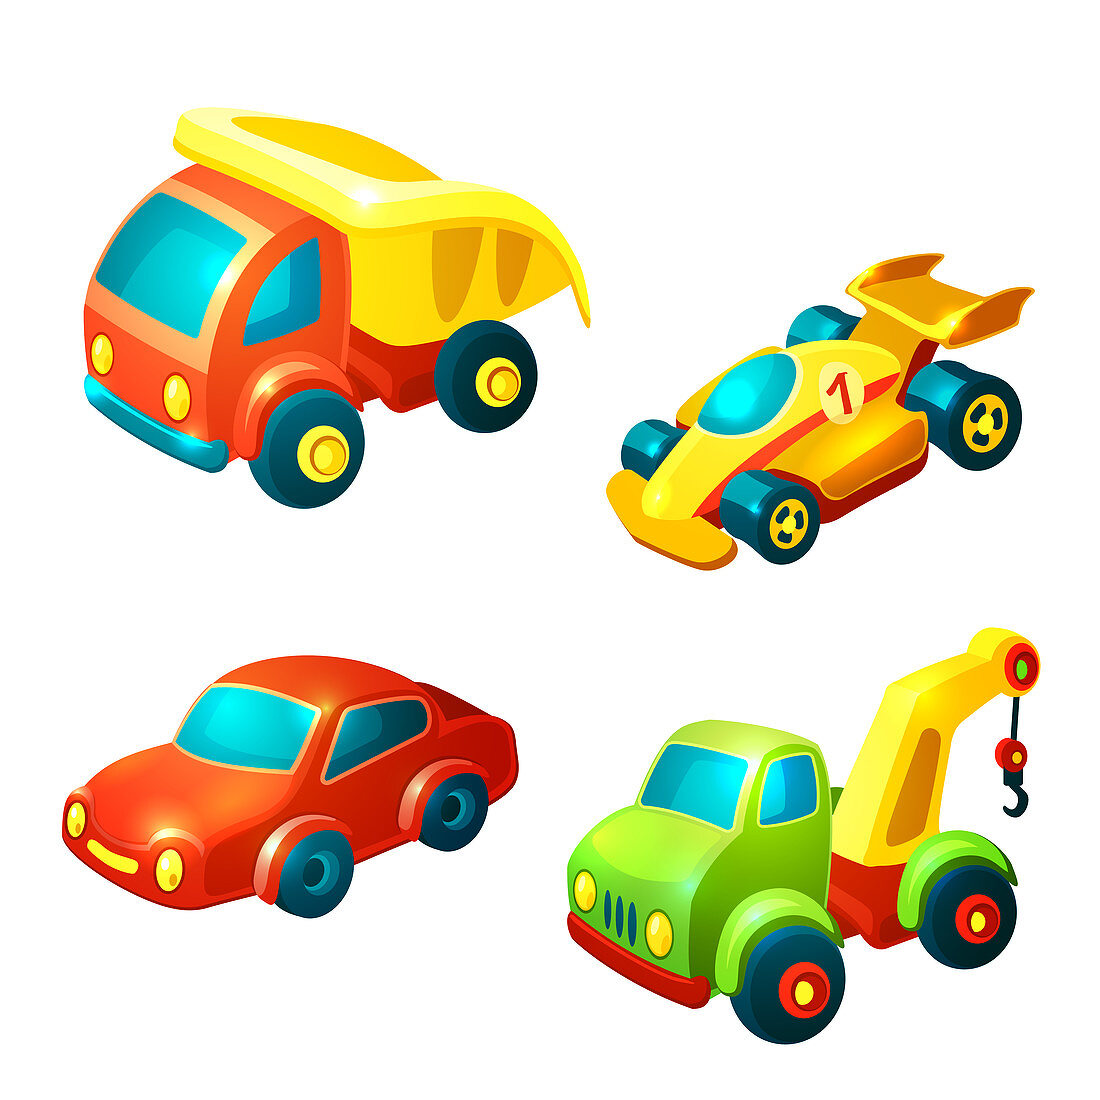 Toy vehicles, illustration